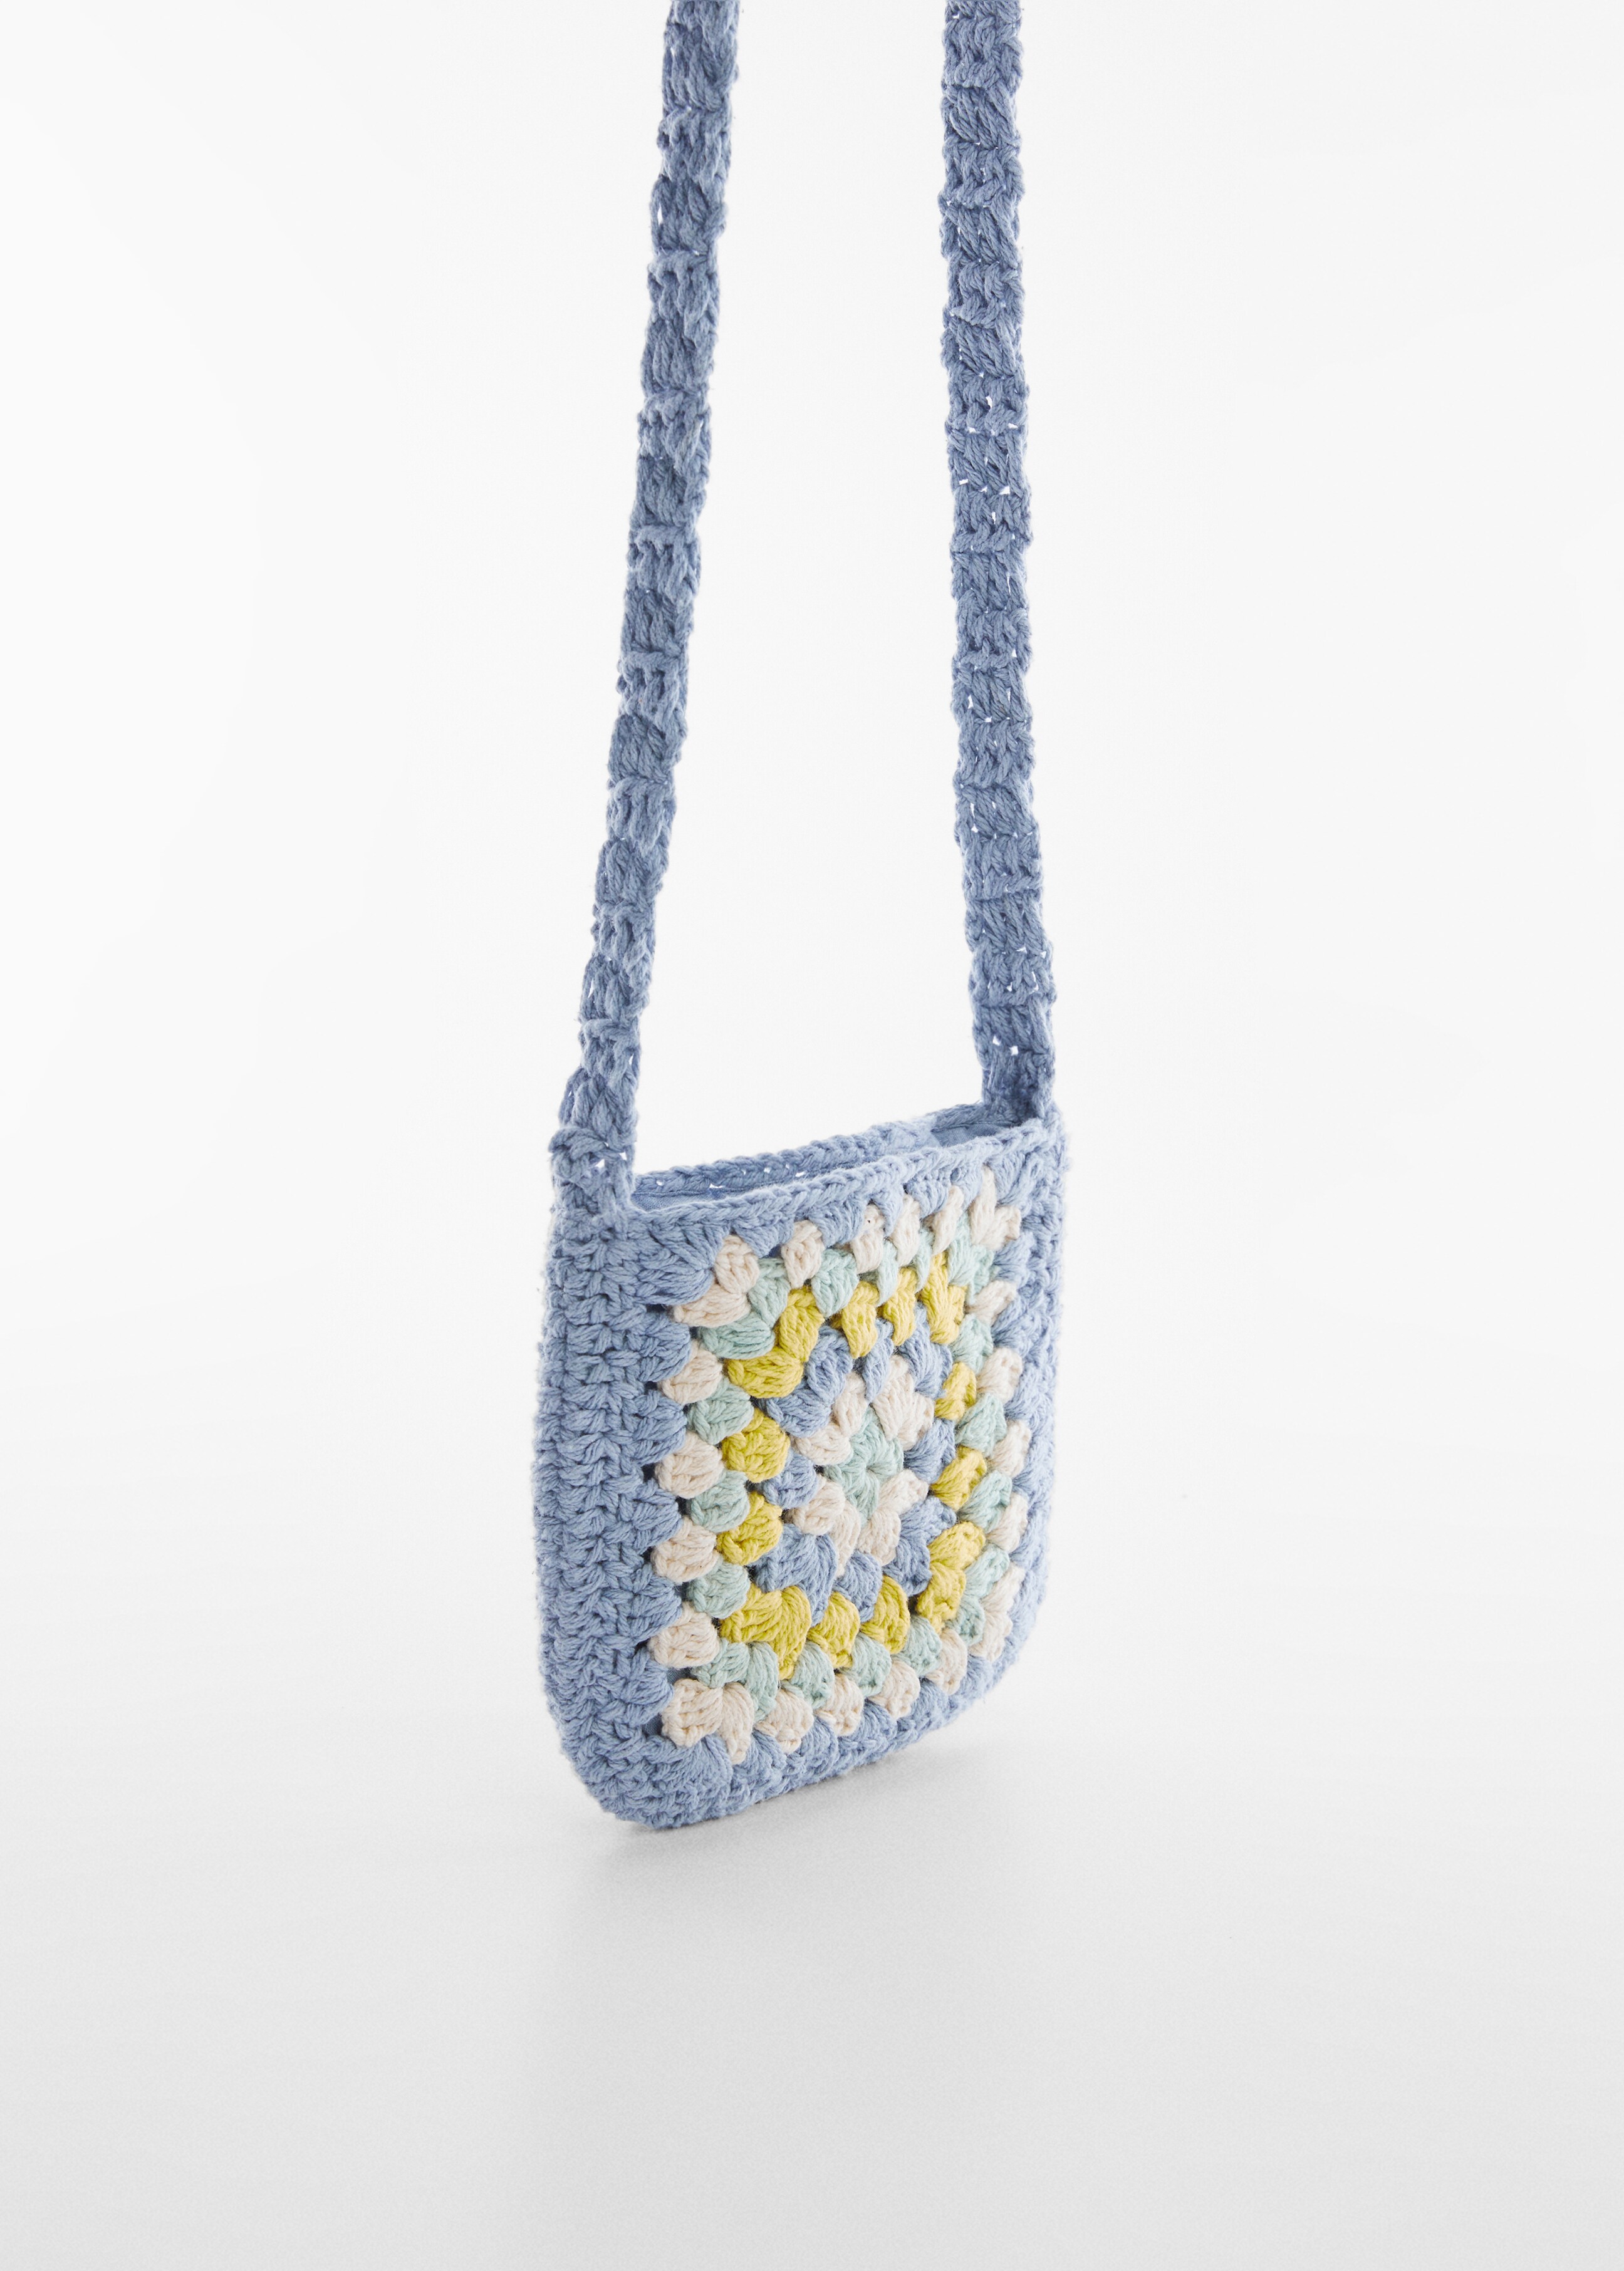 Colourful crochet bag - Medium plane